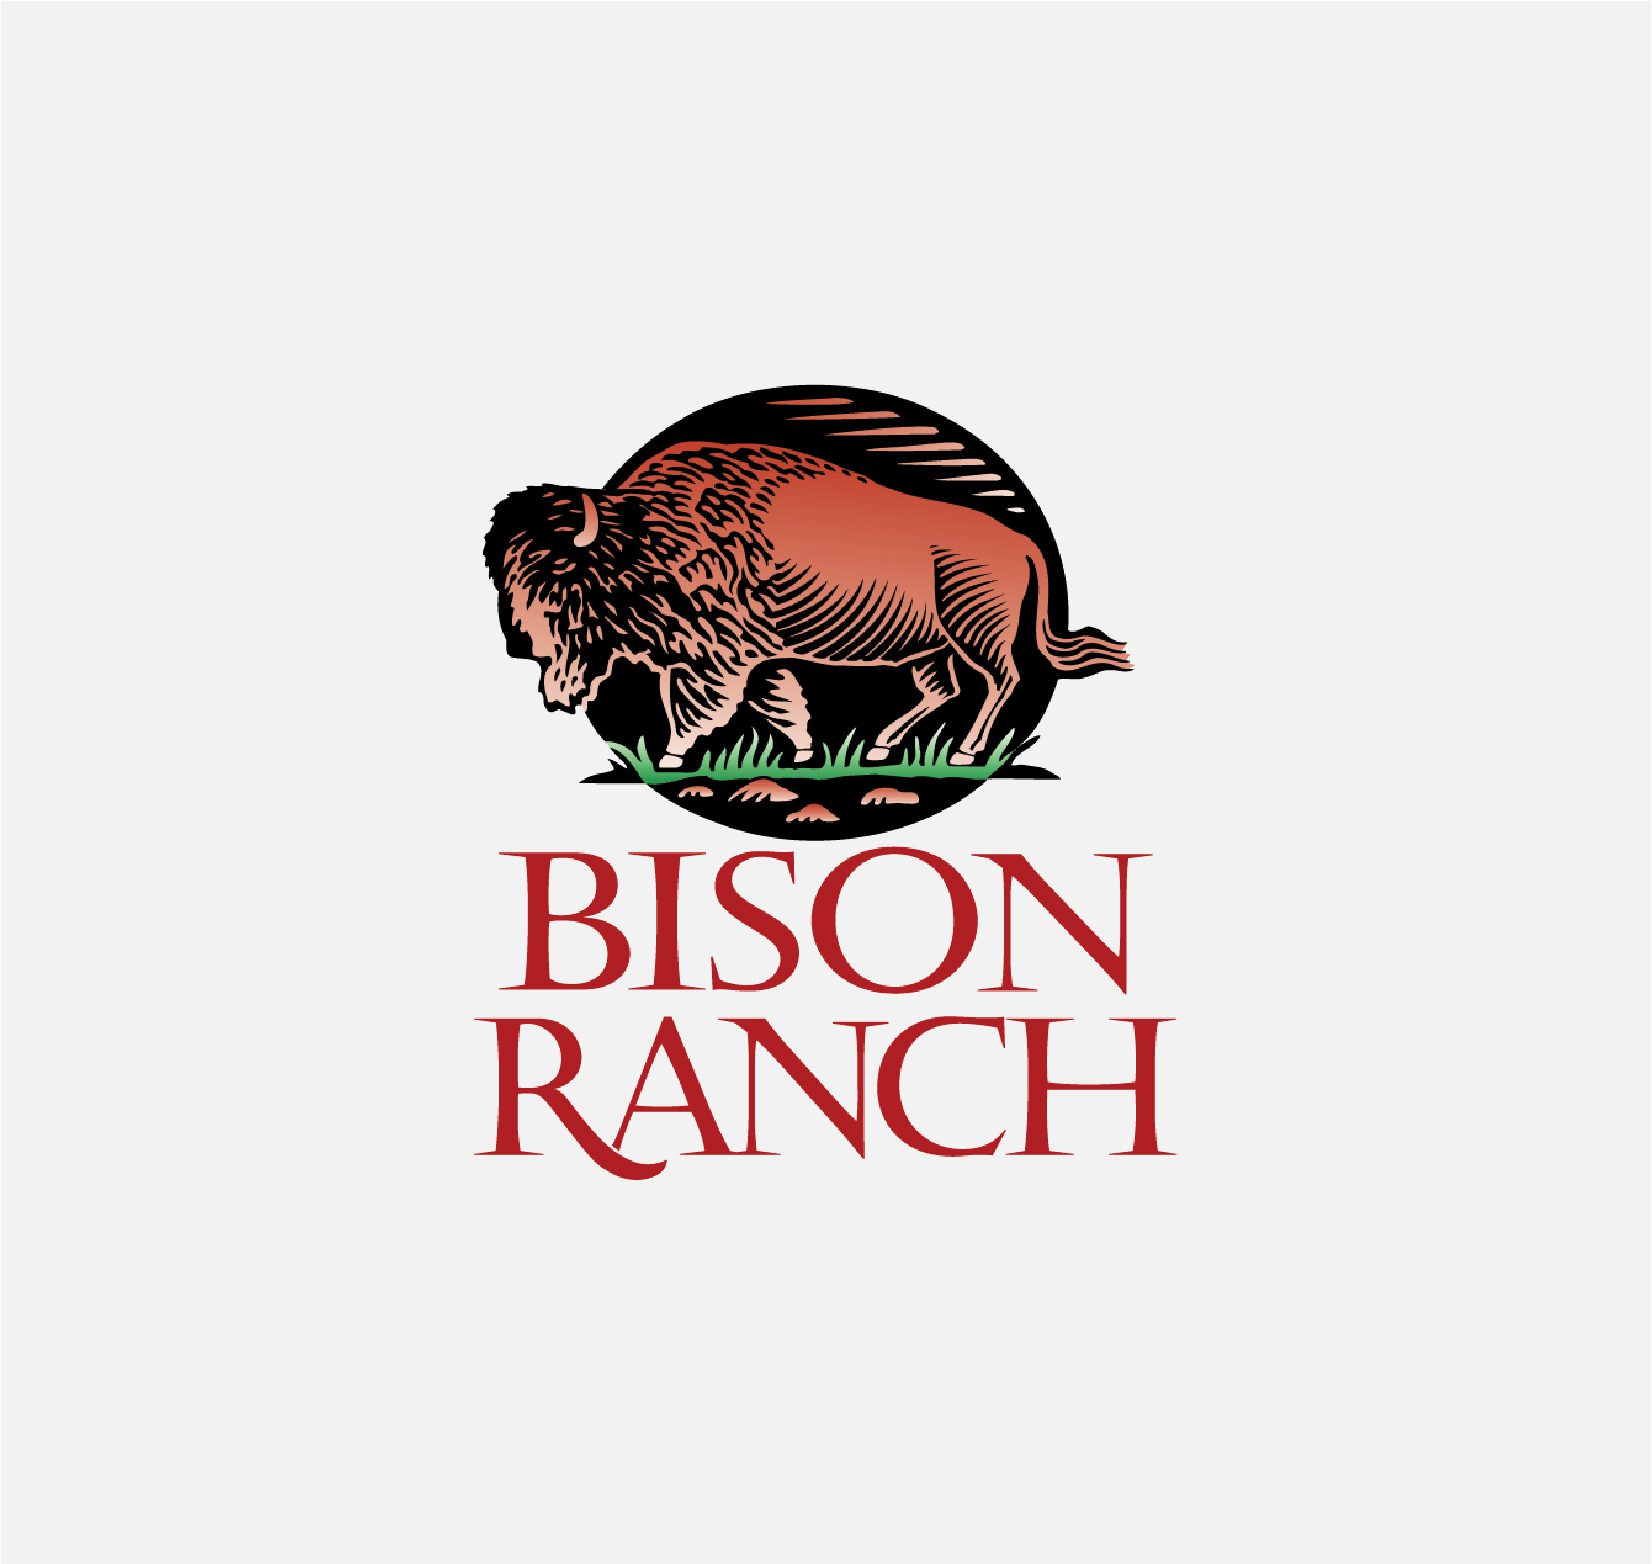 Bison Ranch logo